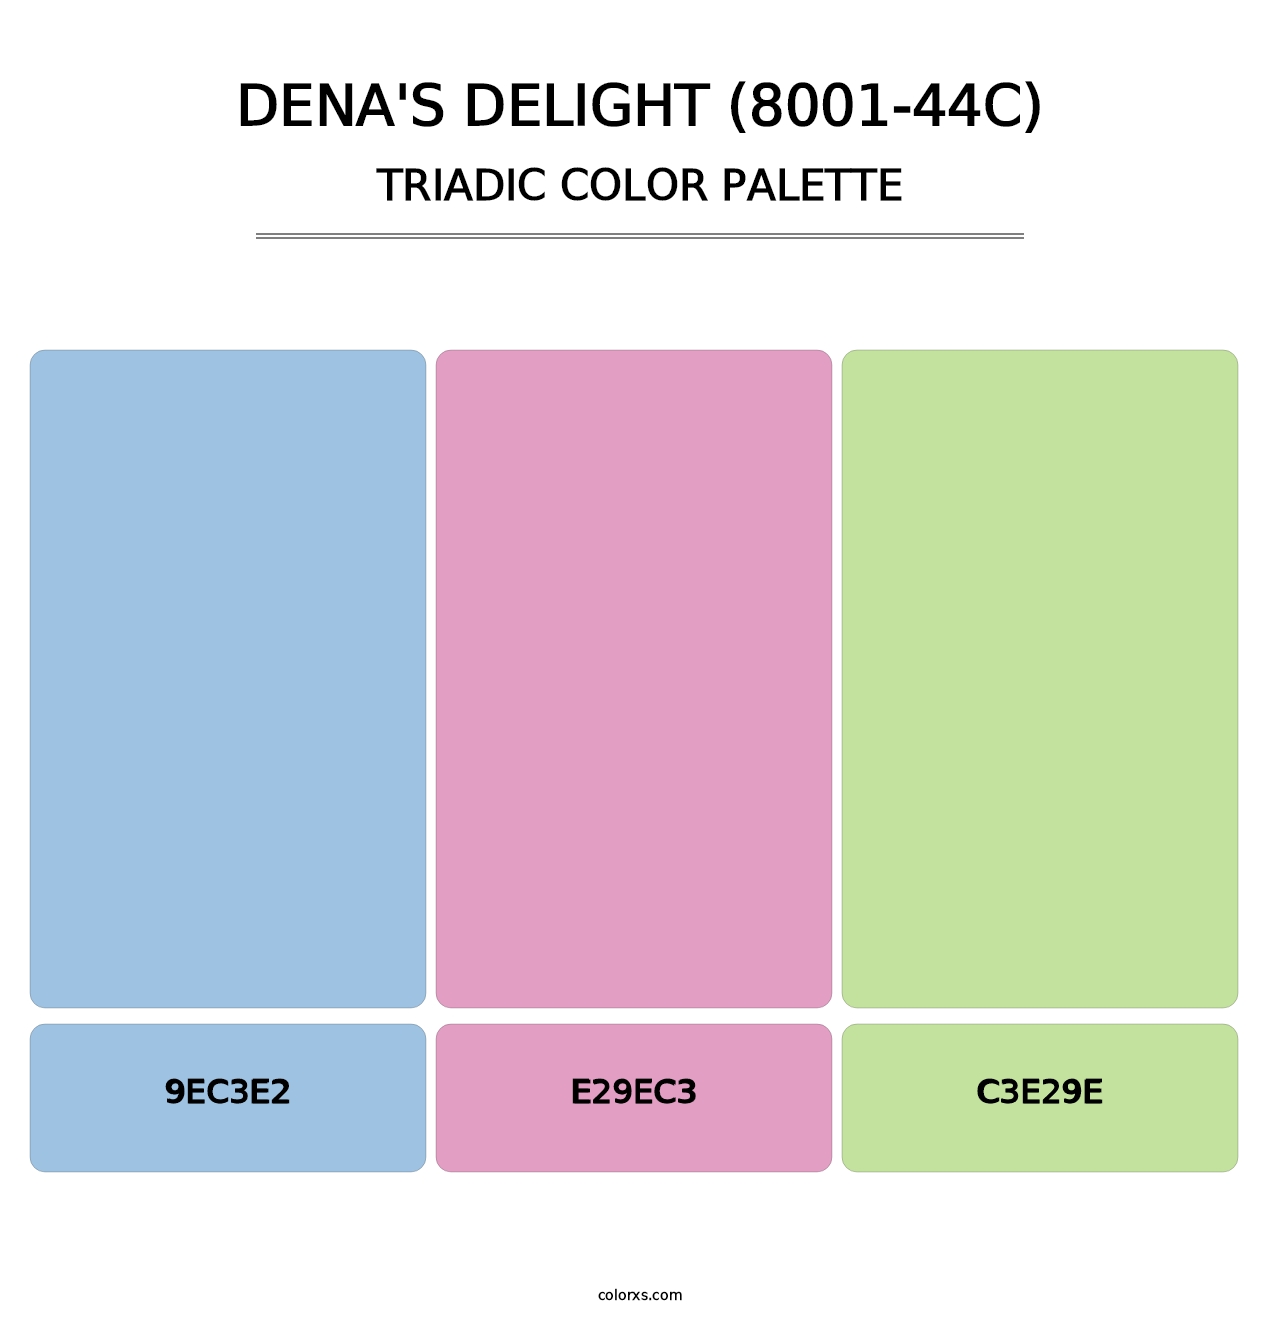 Dena's Delight (8001-44C) - Triadic Color Palette